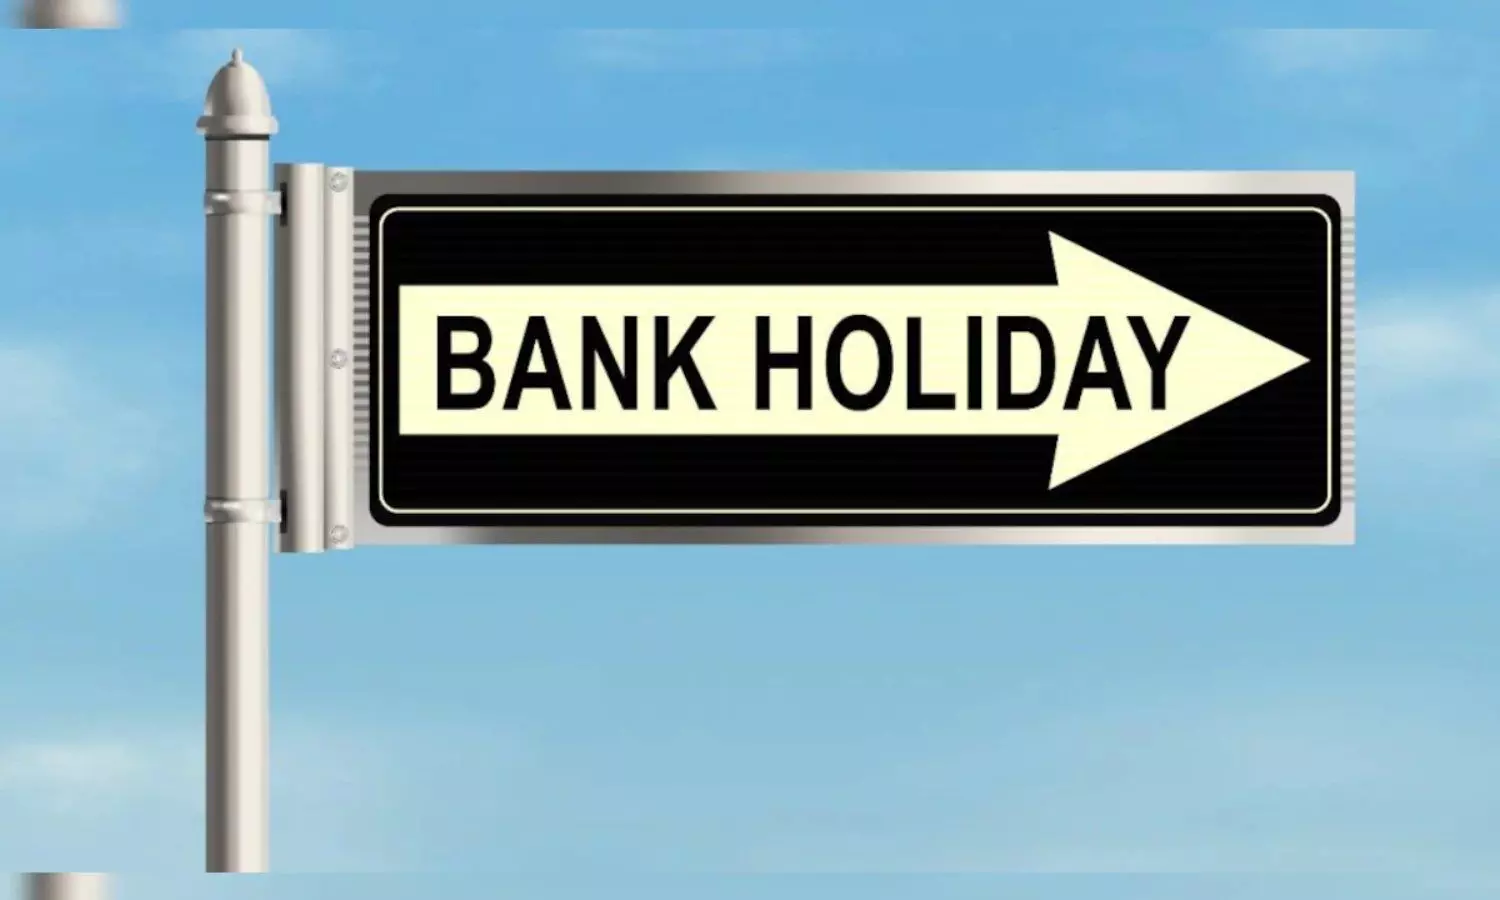 Bank Holidays October 2022